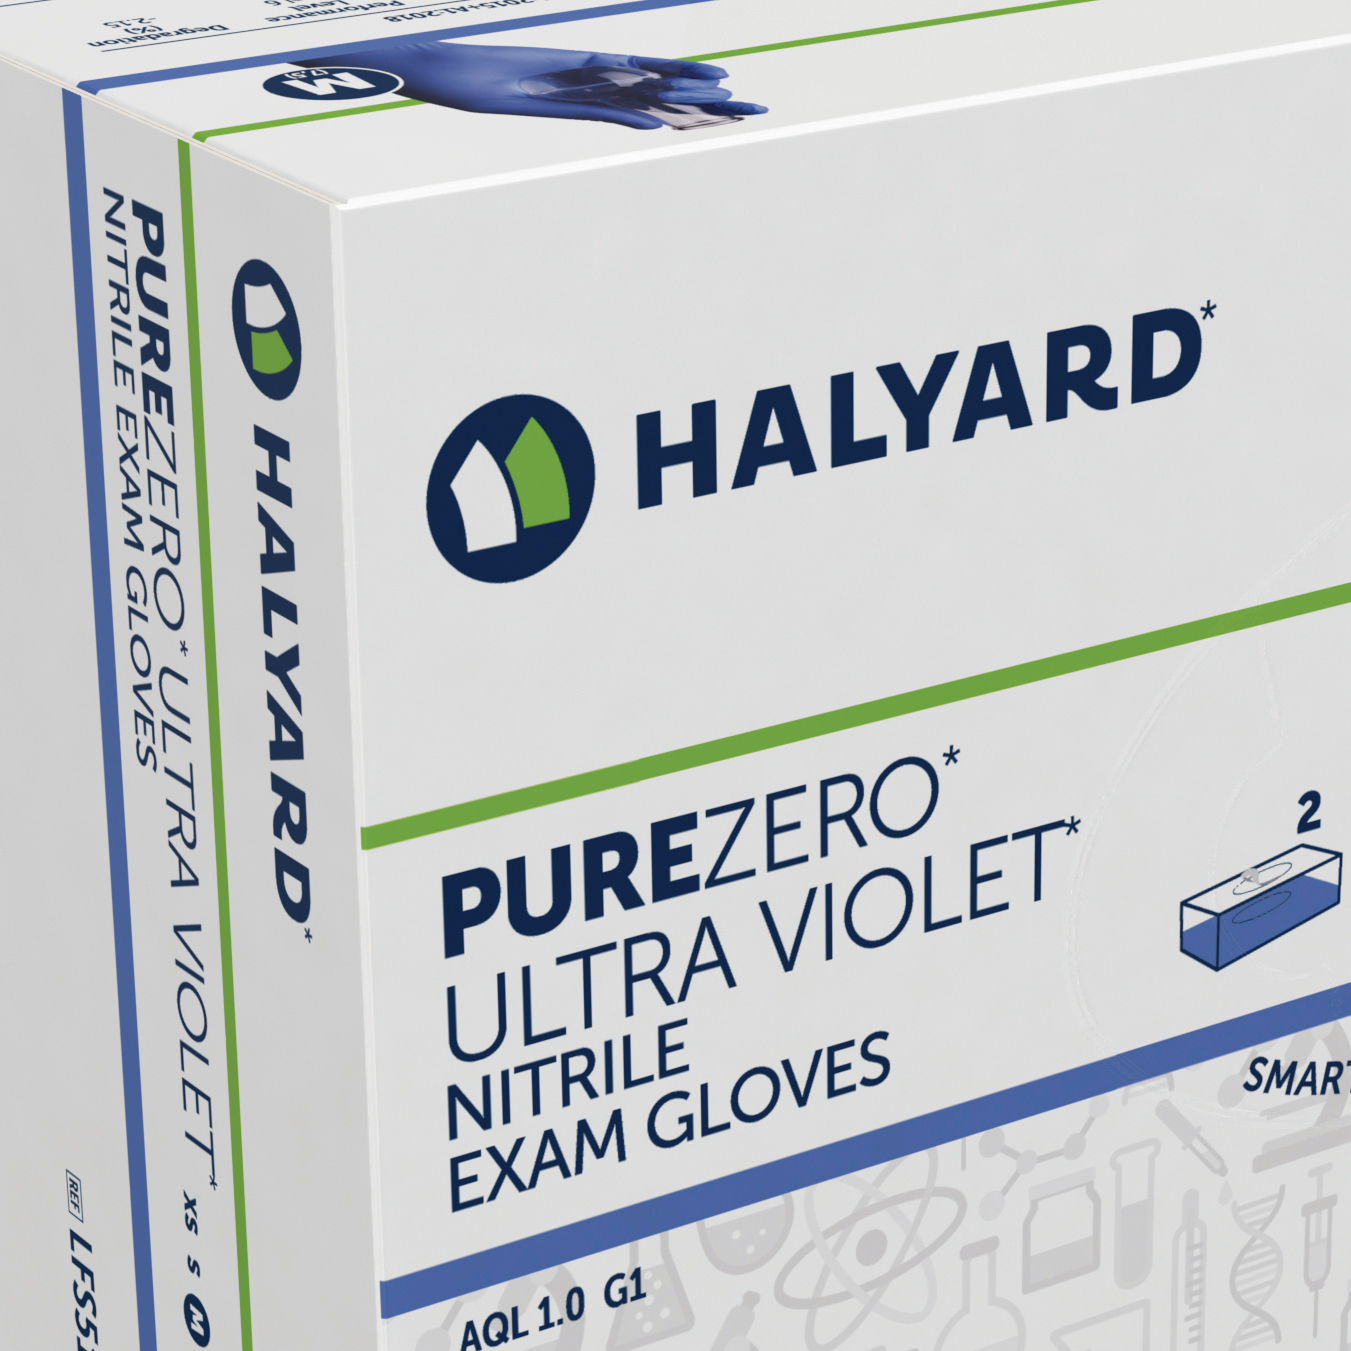 HALYARD Lab Gloves Packaging